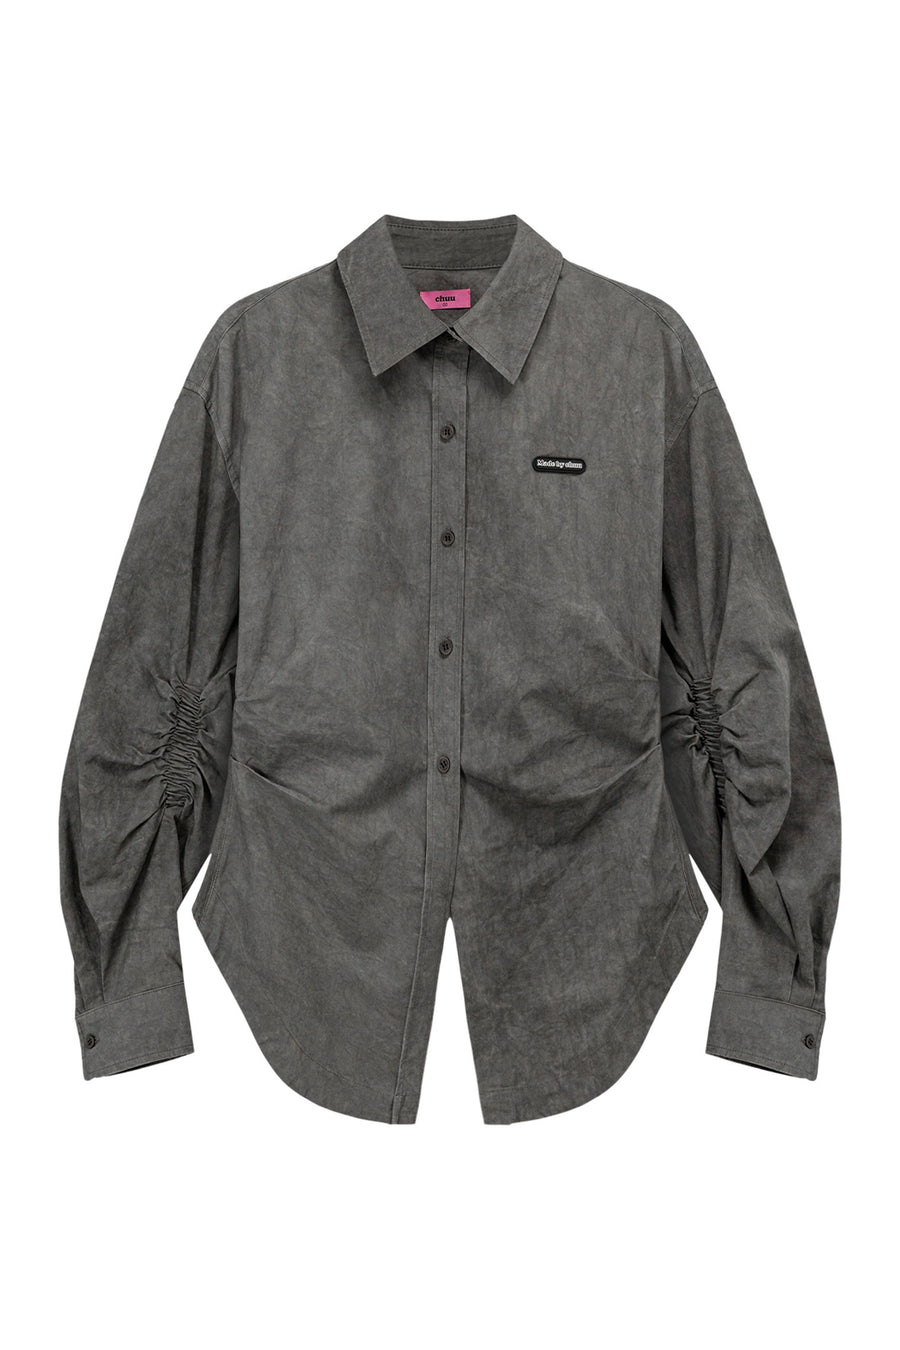 CHUU Shirring Unbalanced Button Shirt